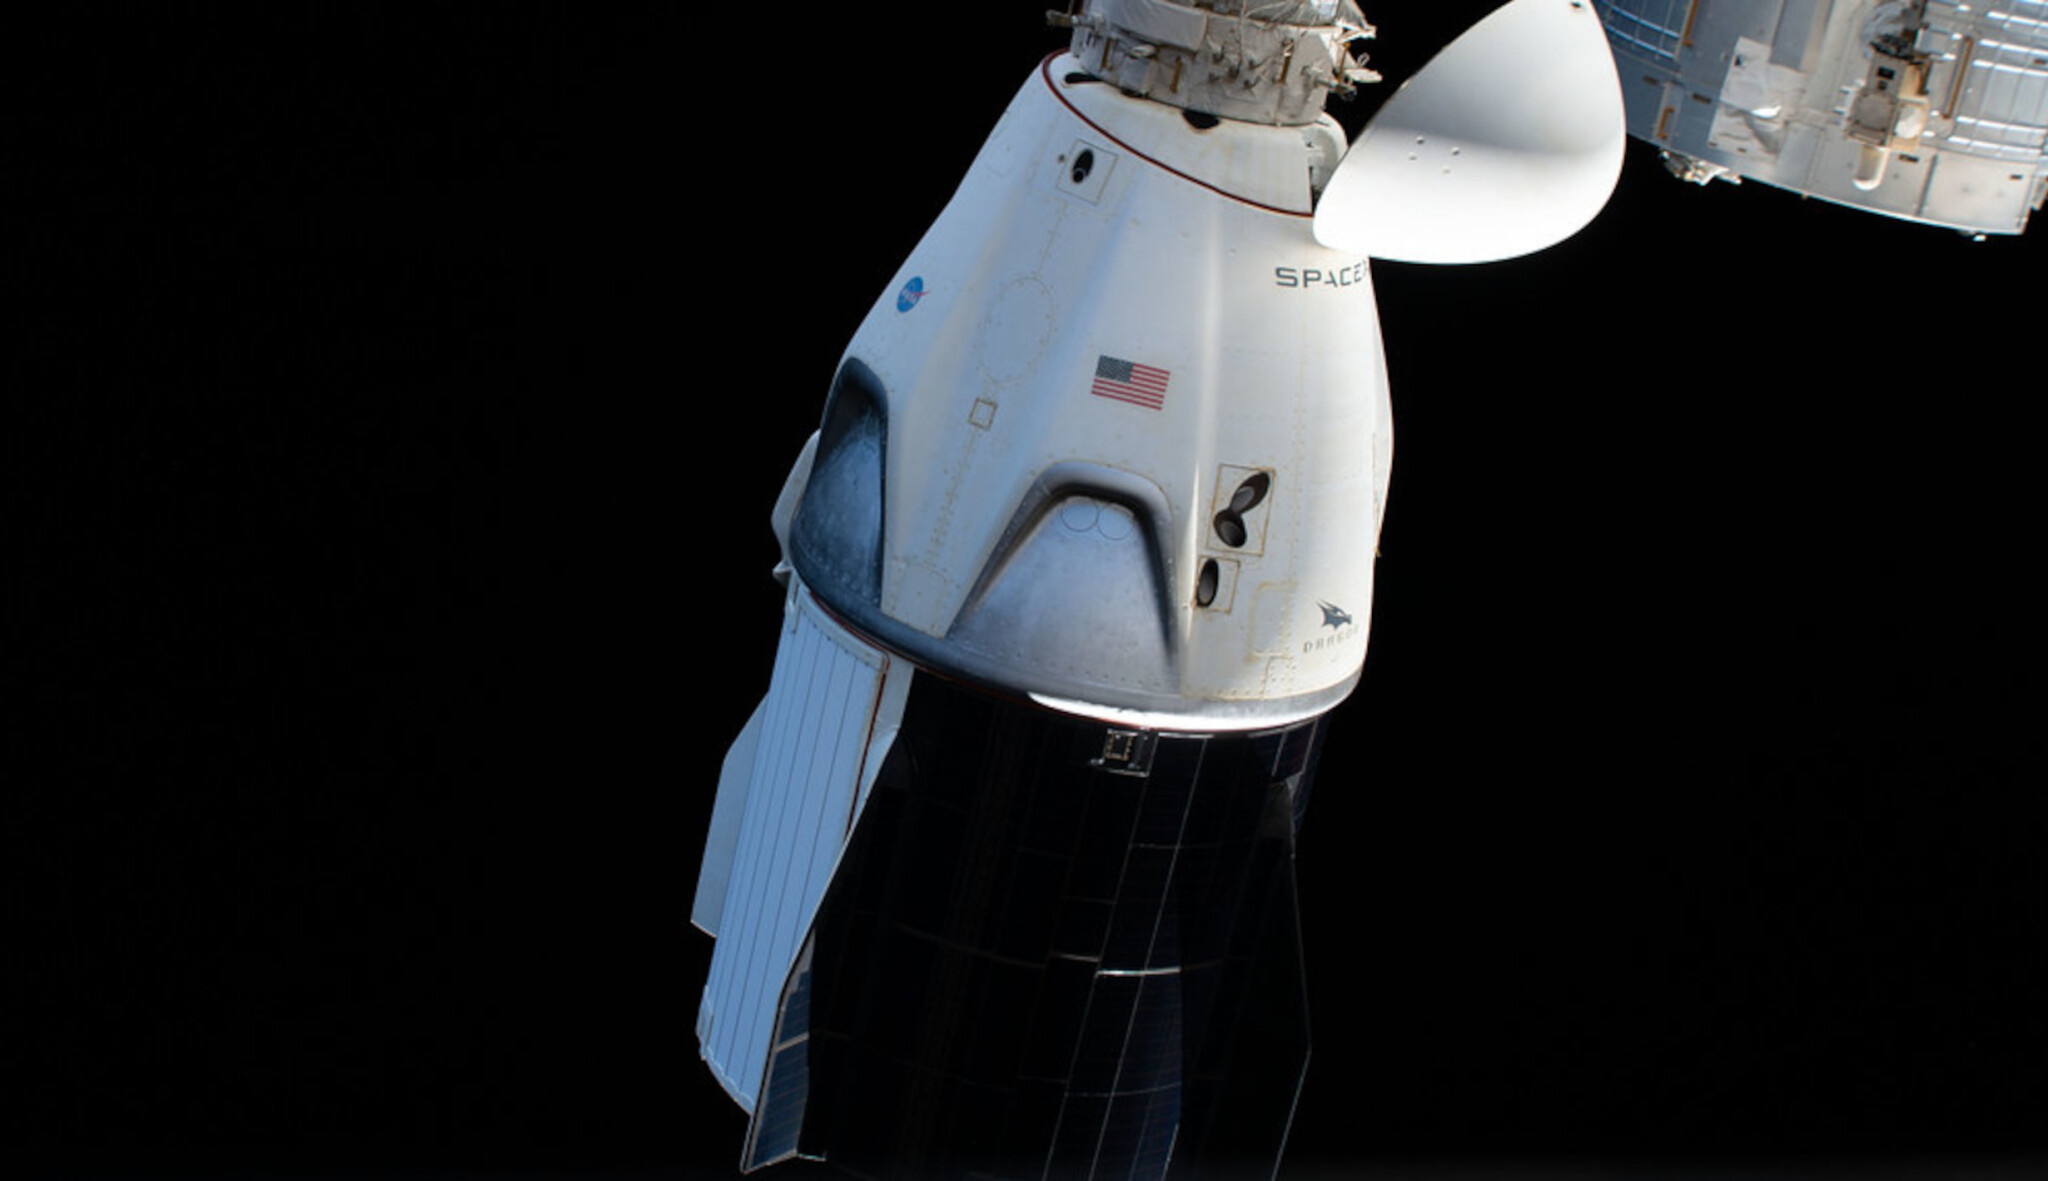 SpaceX tento týden úspěšně vystřídala expedice astronautů na ISS